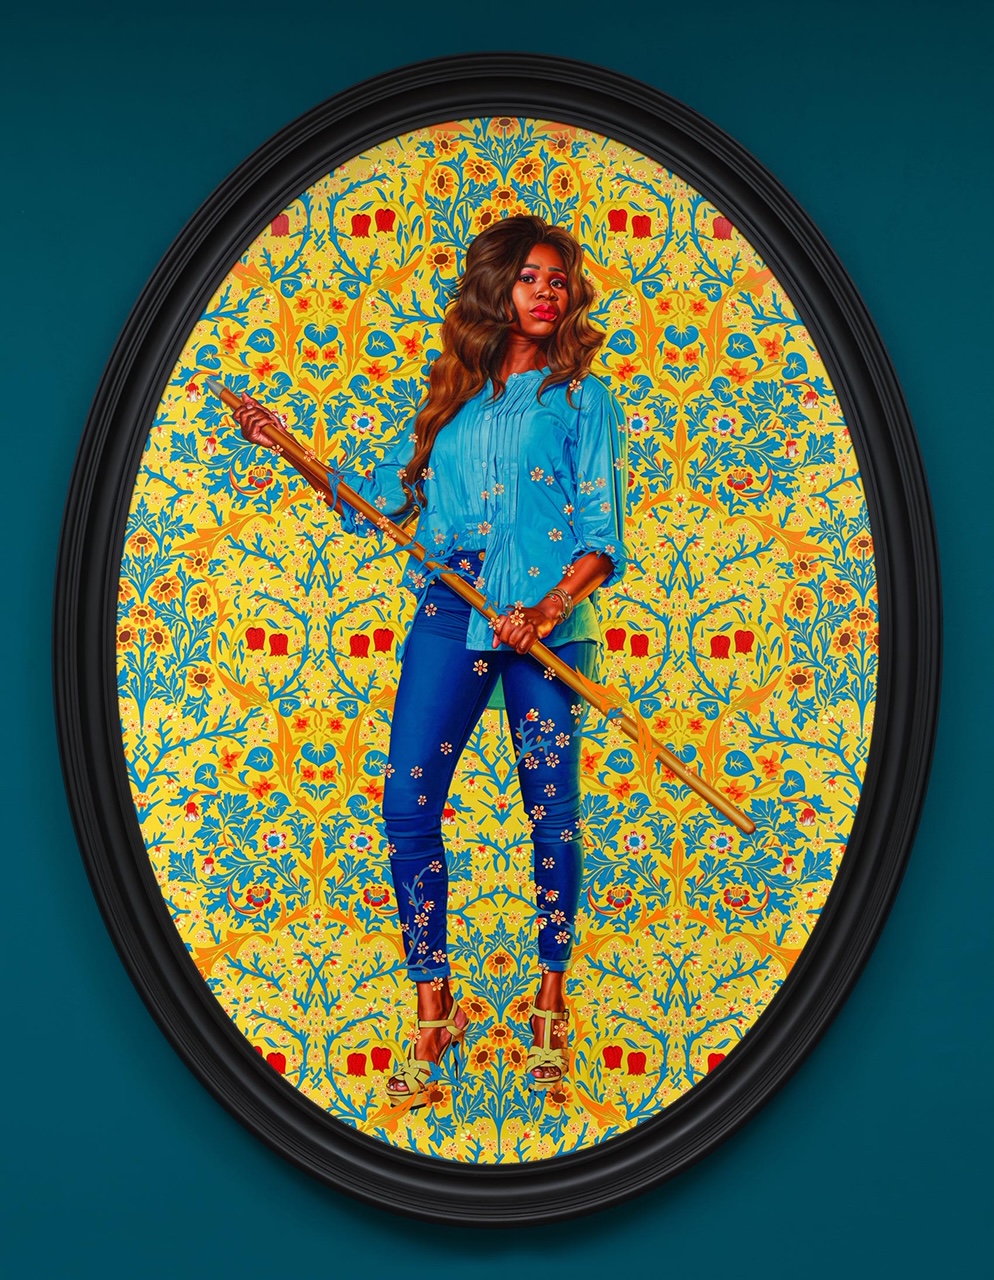 kehindewiley_the yellow wallpaper_Portrait of Dorinda Essah